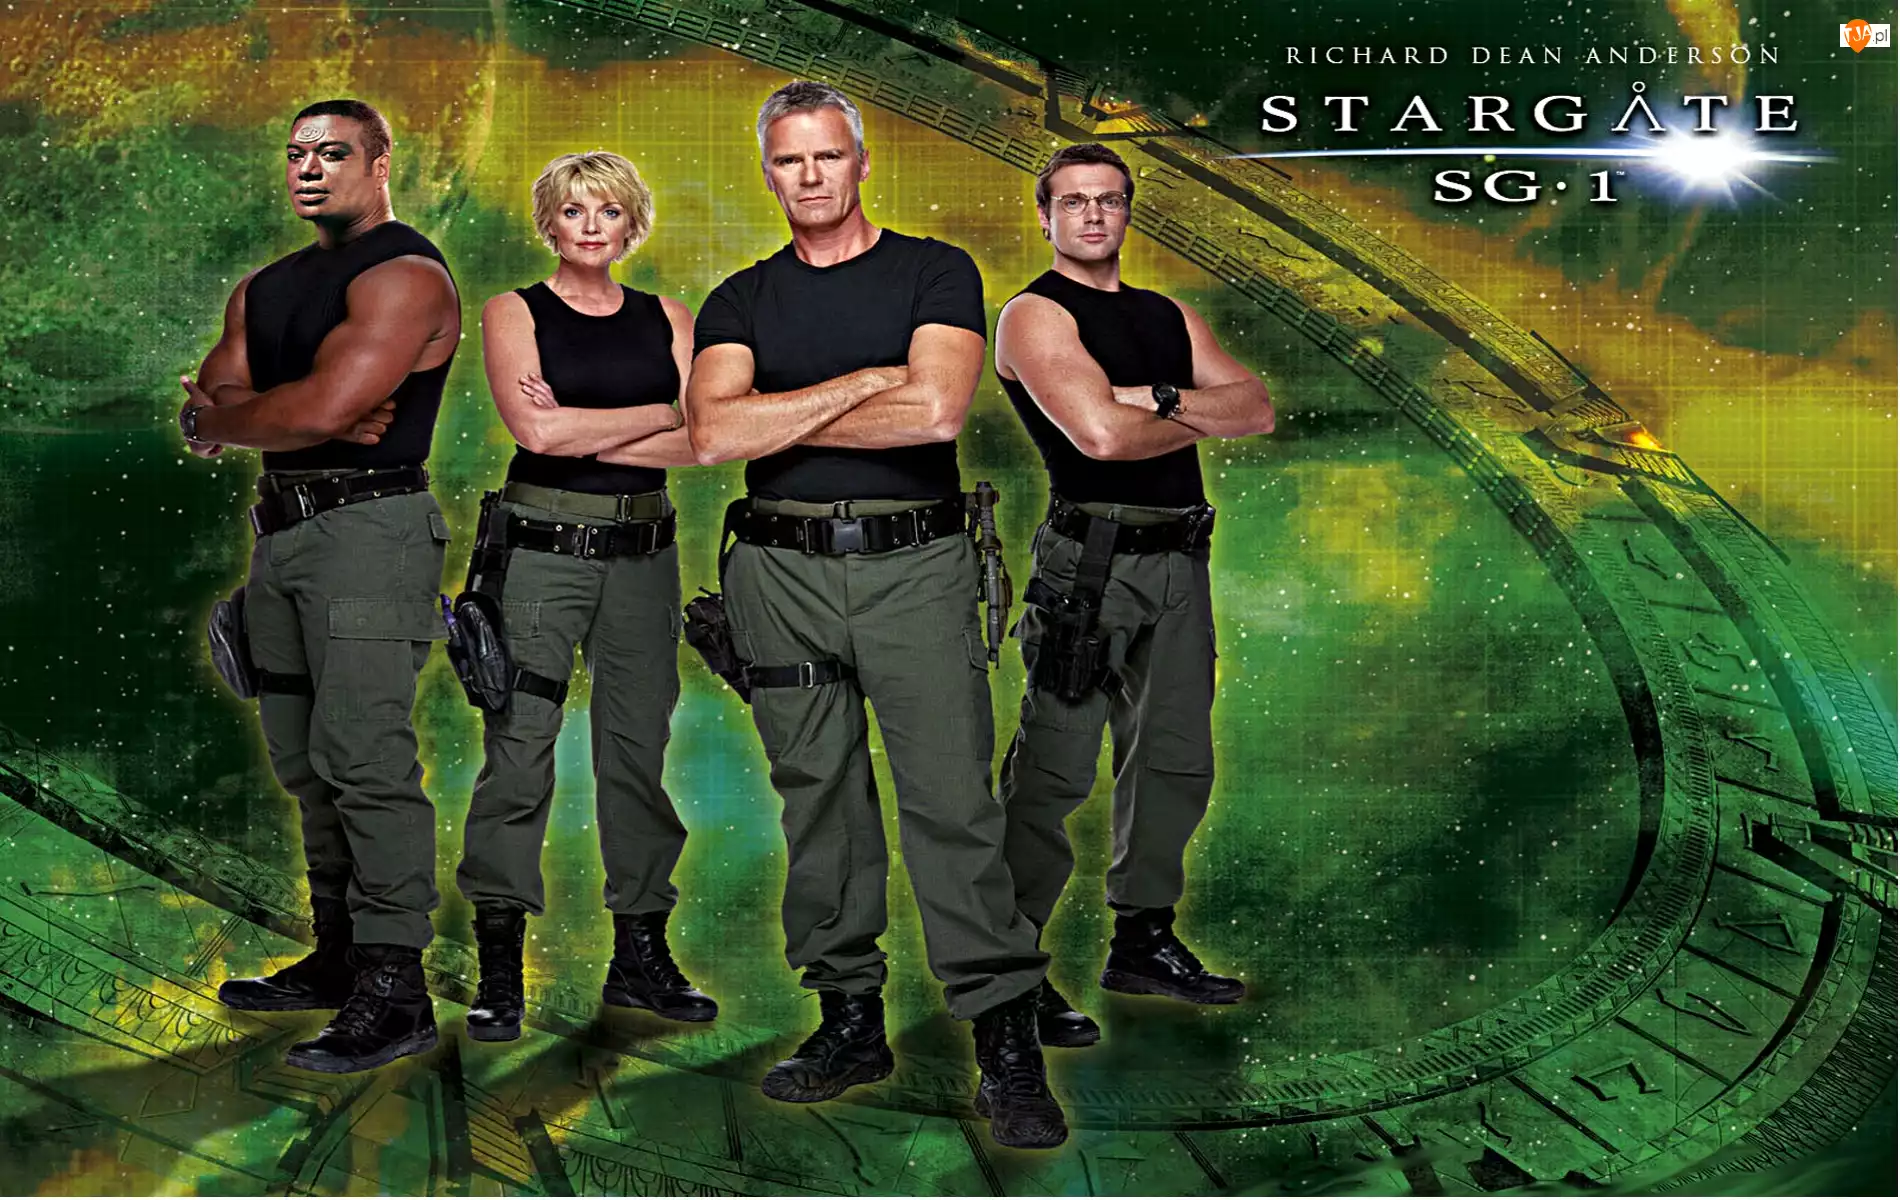 Stargate SG 1, Christopher Judge, Serial, Gwiezdne wrota, Michael Shanks, Richard Dean Anderson, Amanda Tapping